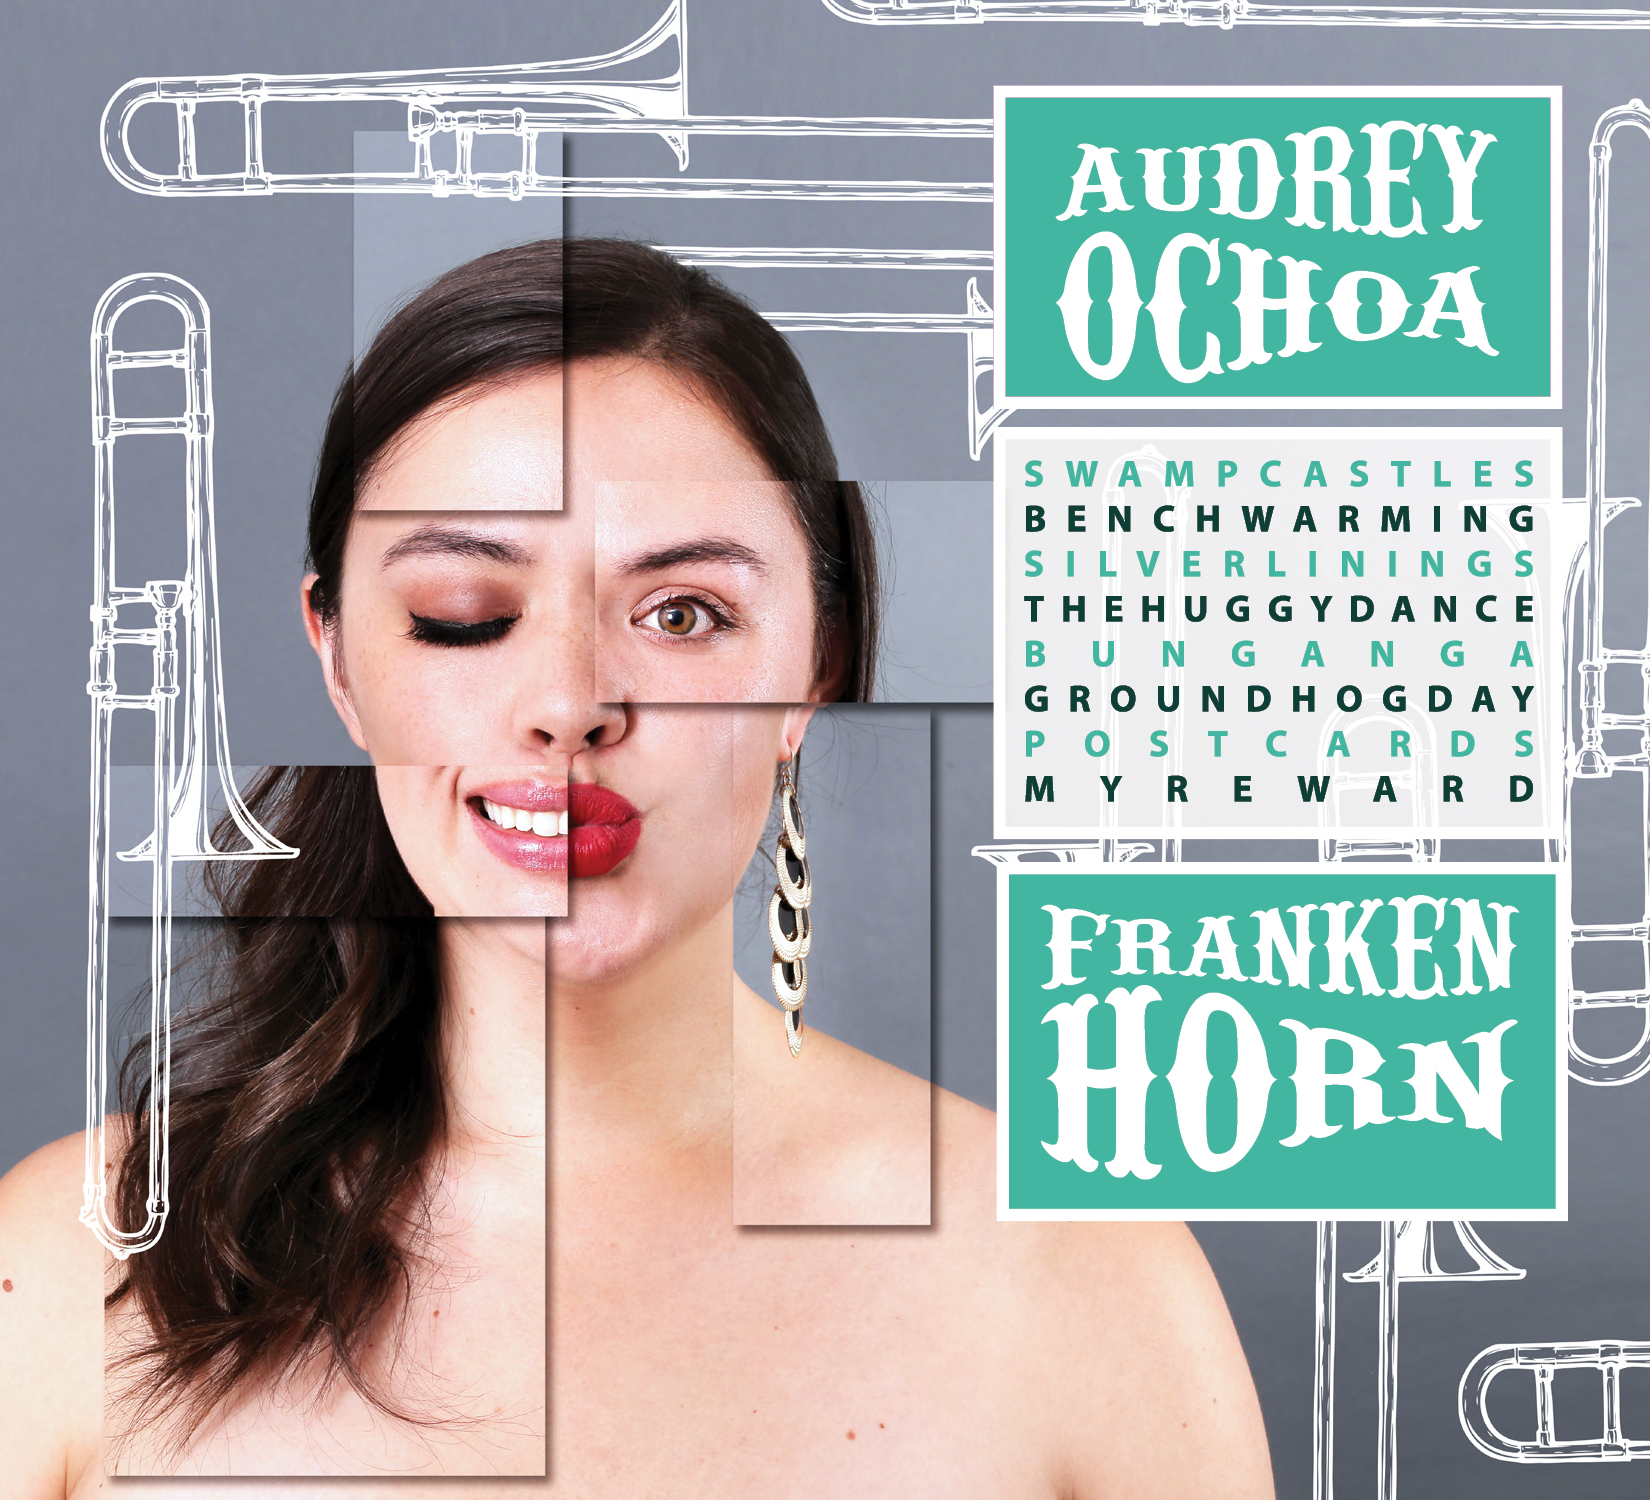 Frankenhorn - Audrey Ochoa